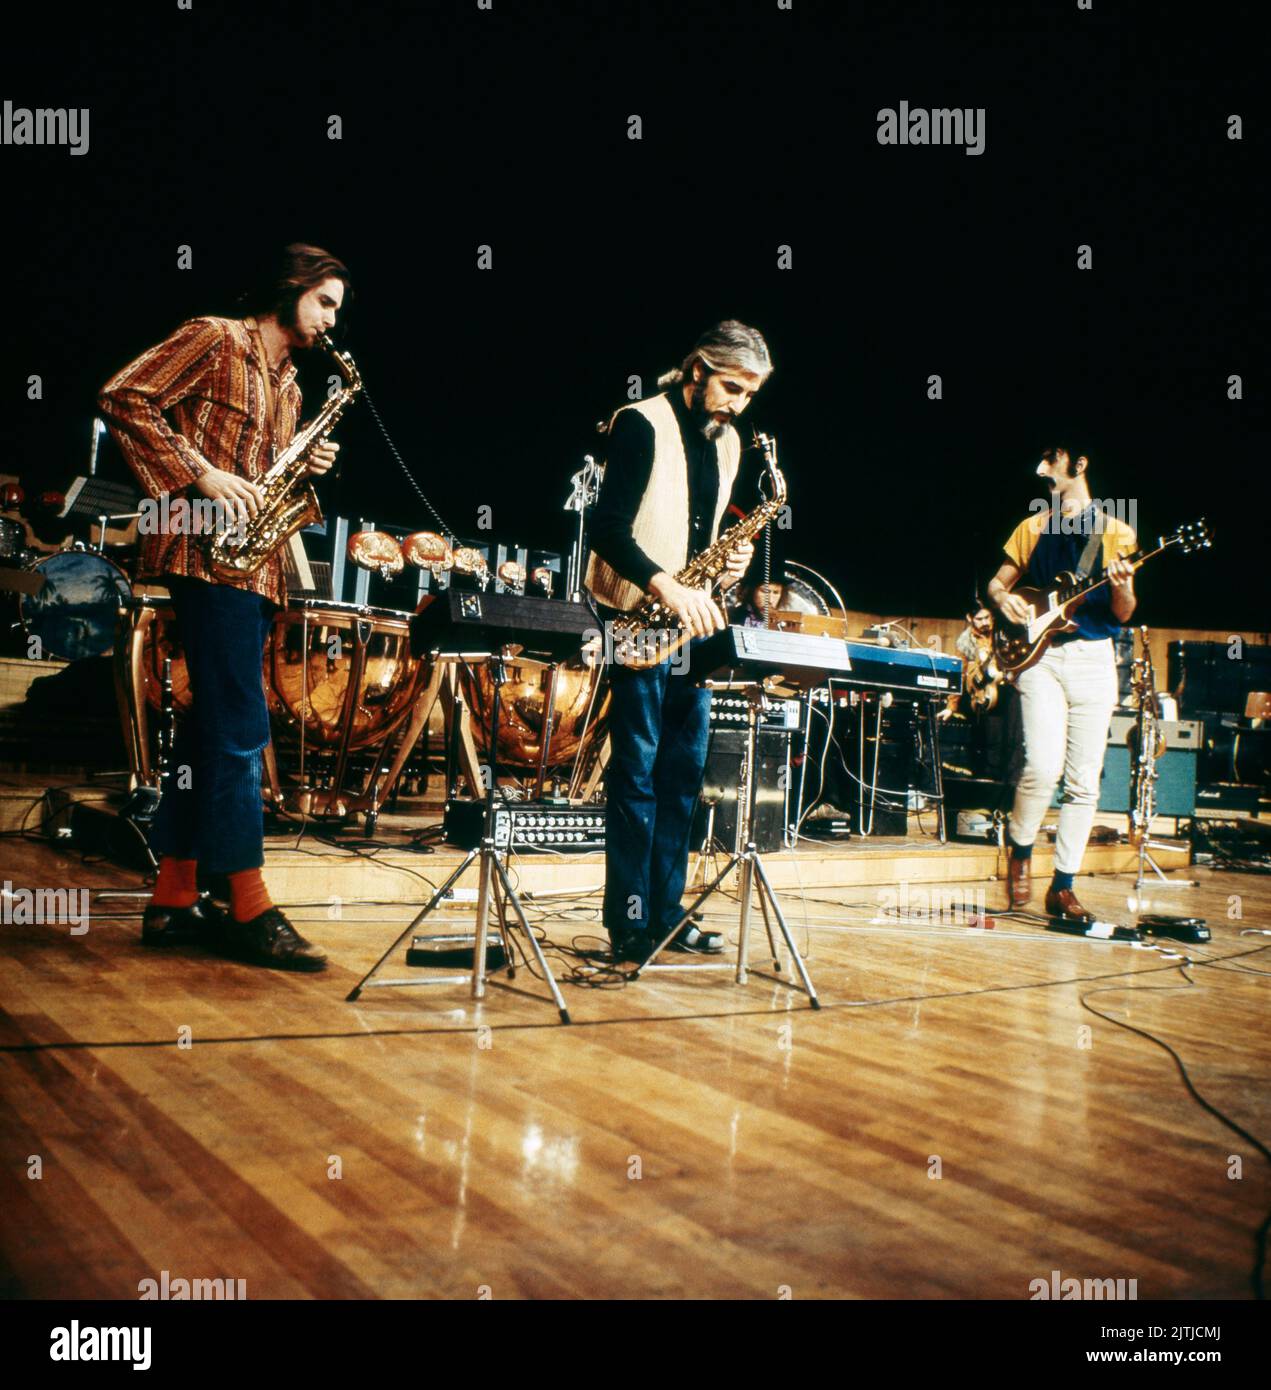 Frank Zappa, amerikanischer Musiker, spielt Jazzrock, Blues, Avantgarde, Art rock, hier bei einem Konzert mit der Band: Mothers of Invention, circa 1968. Frank Zappa, músico americano, toca jazz rock, blues, avant-garde, Art rock, aquí en un concierto con la banda: Mothers of Invention, alrededor de 1968 Foto de stock